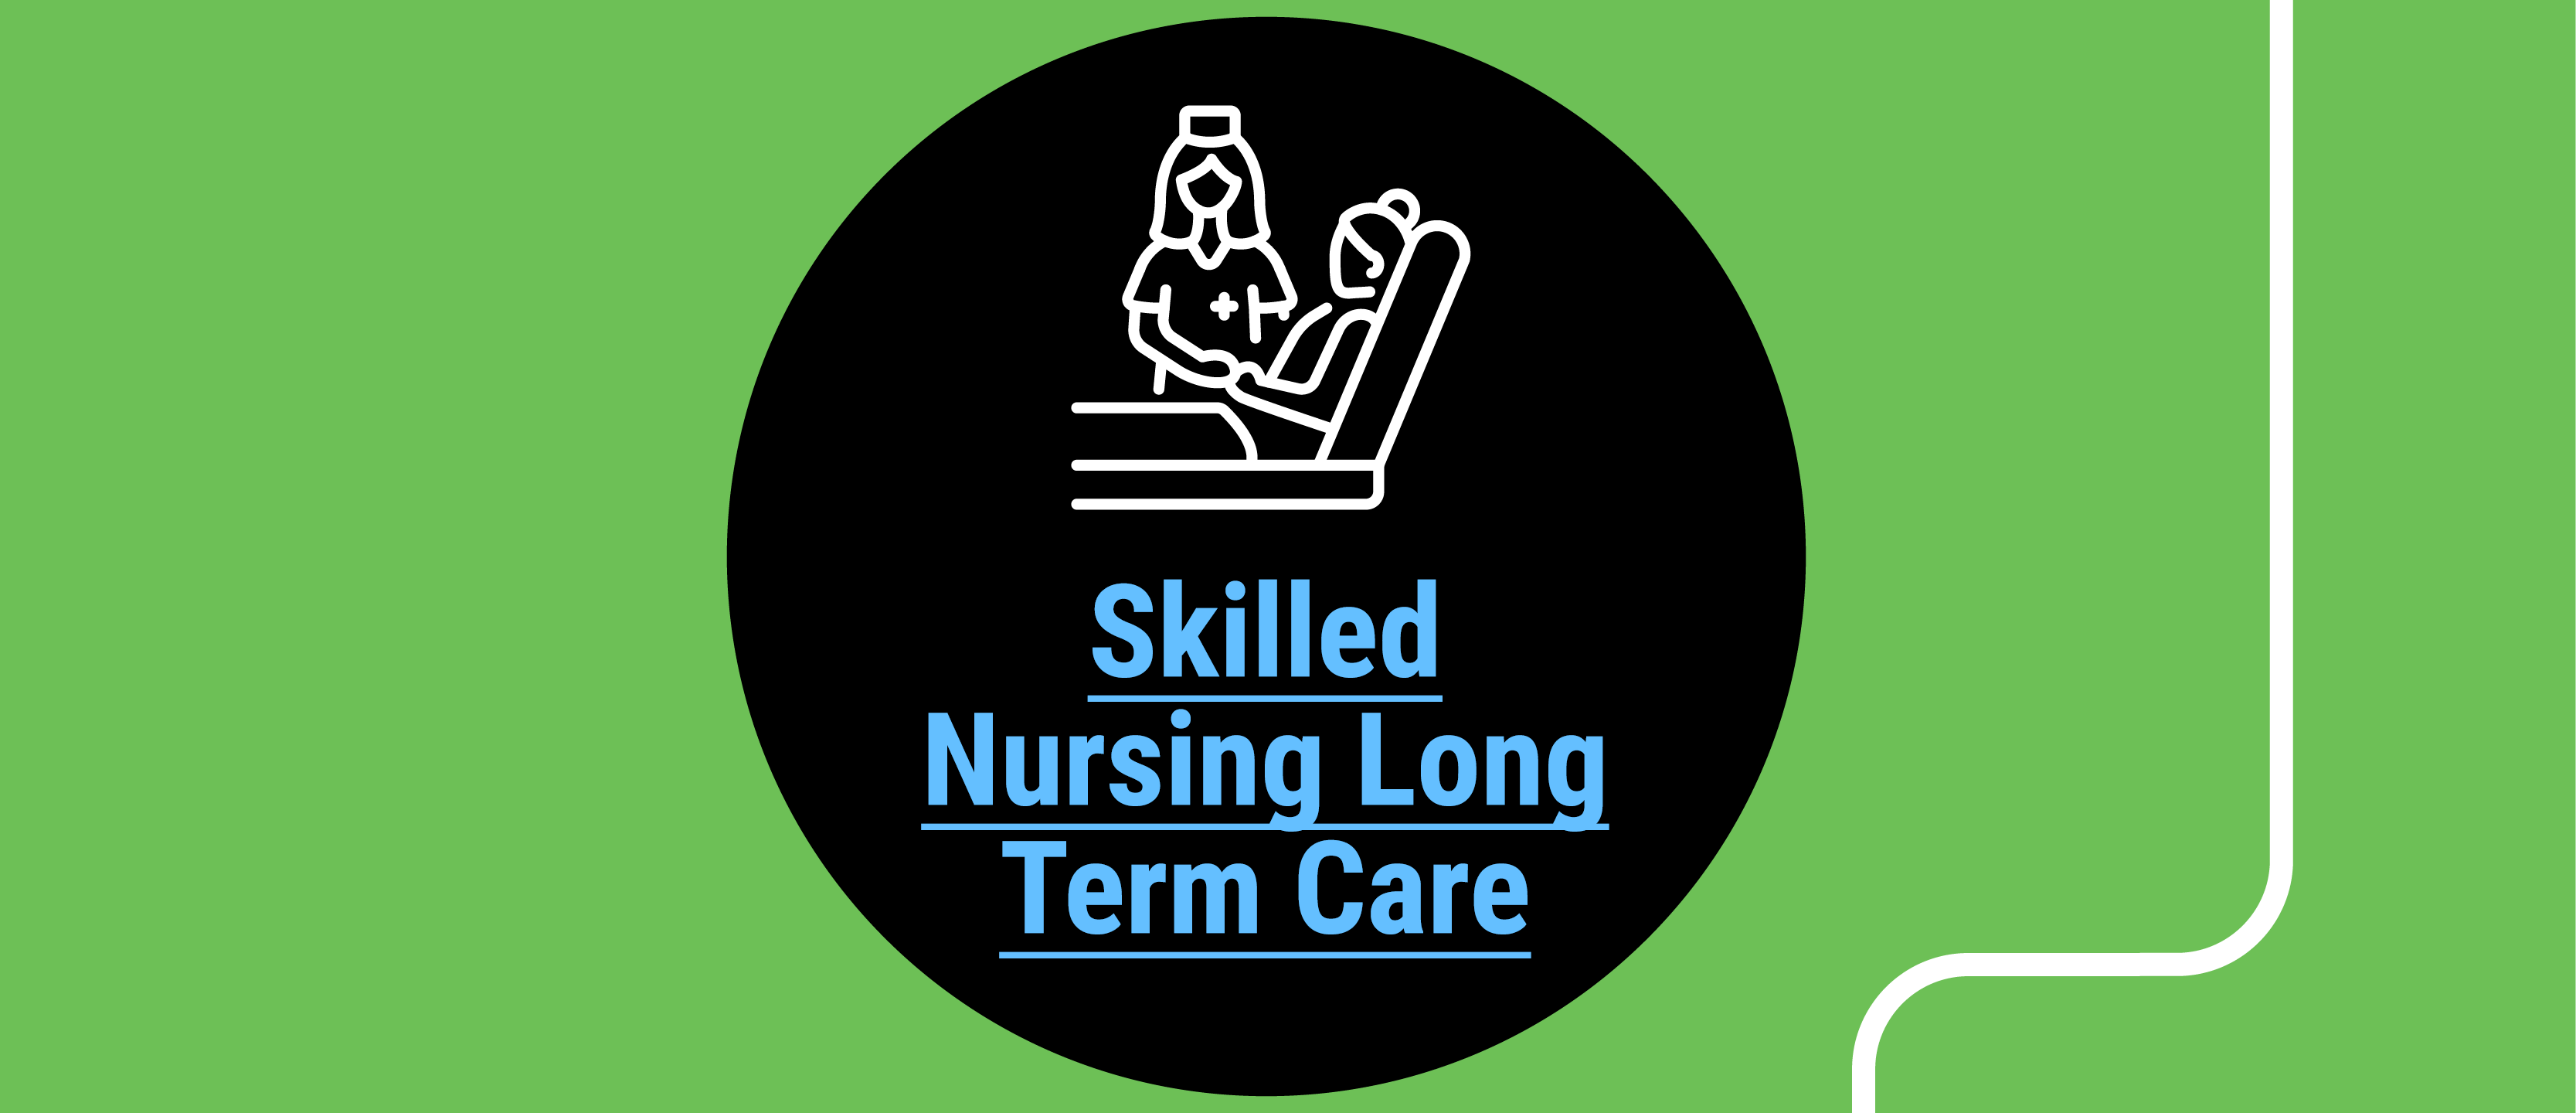 Skilled Nursing Long Term Care